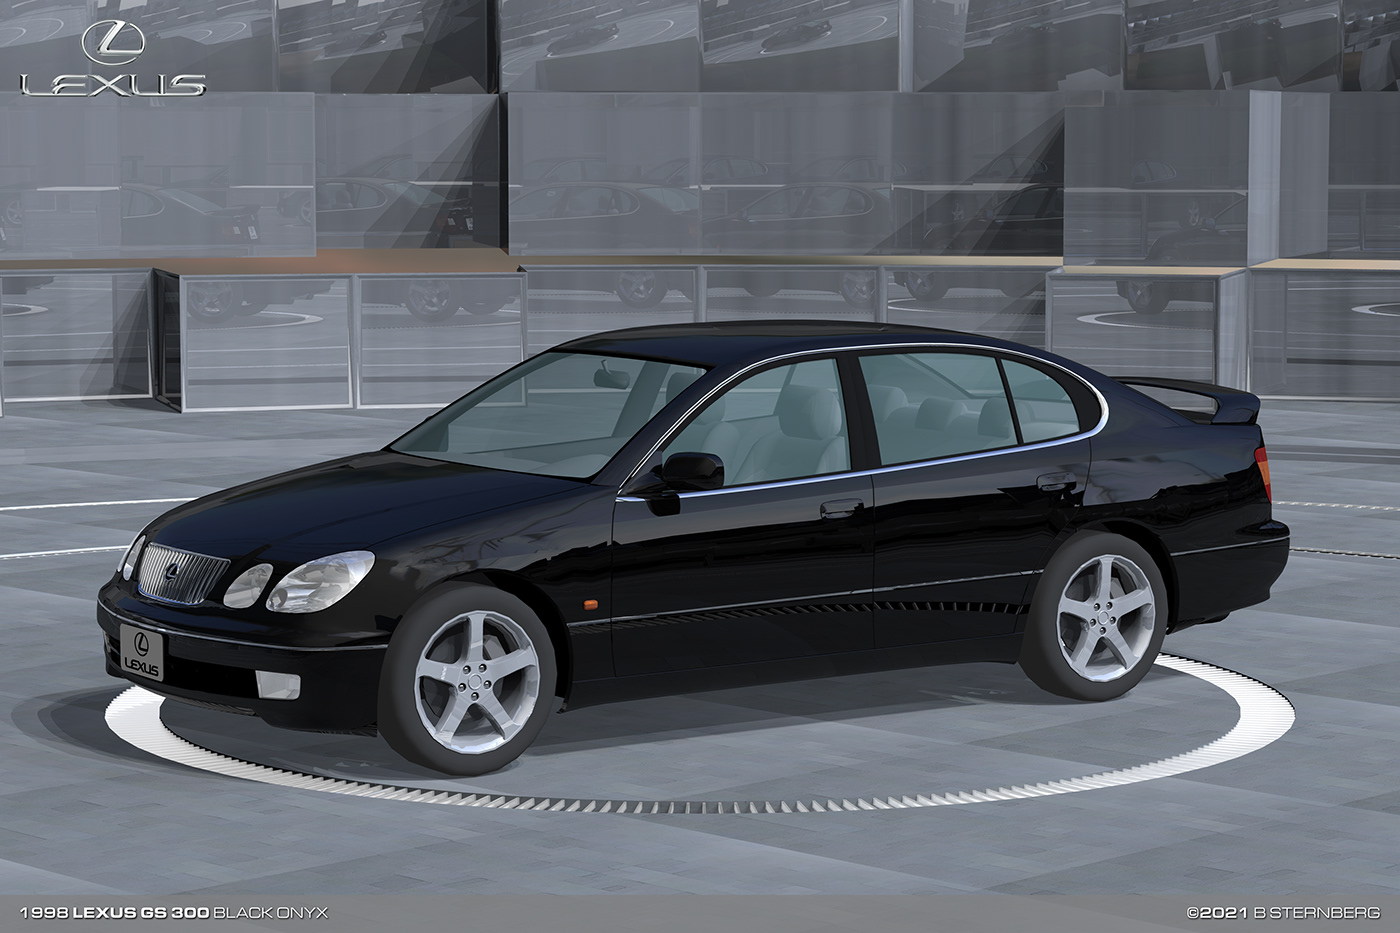 1998 Lexus GS 300, Black Onyx | Behance